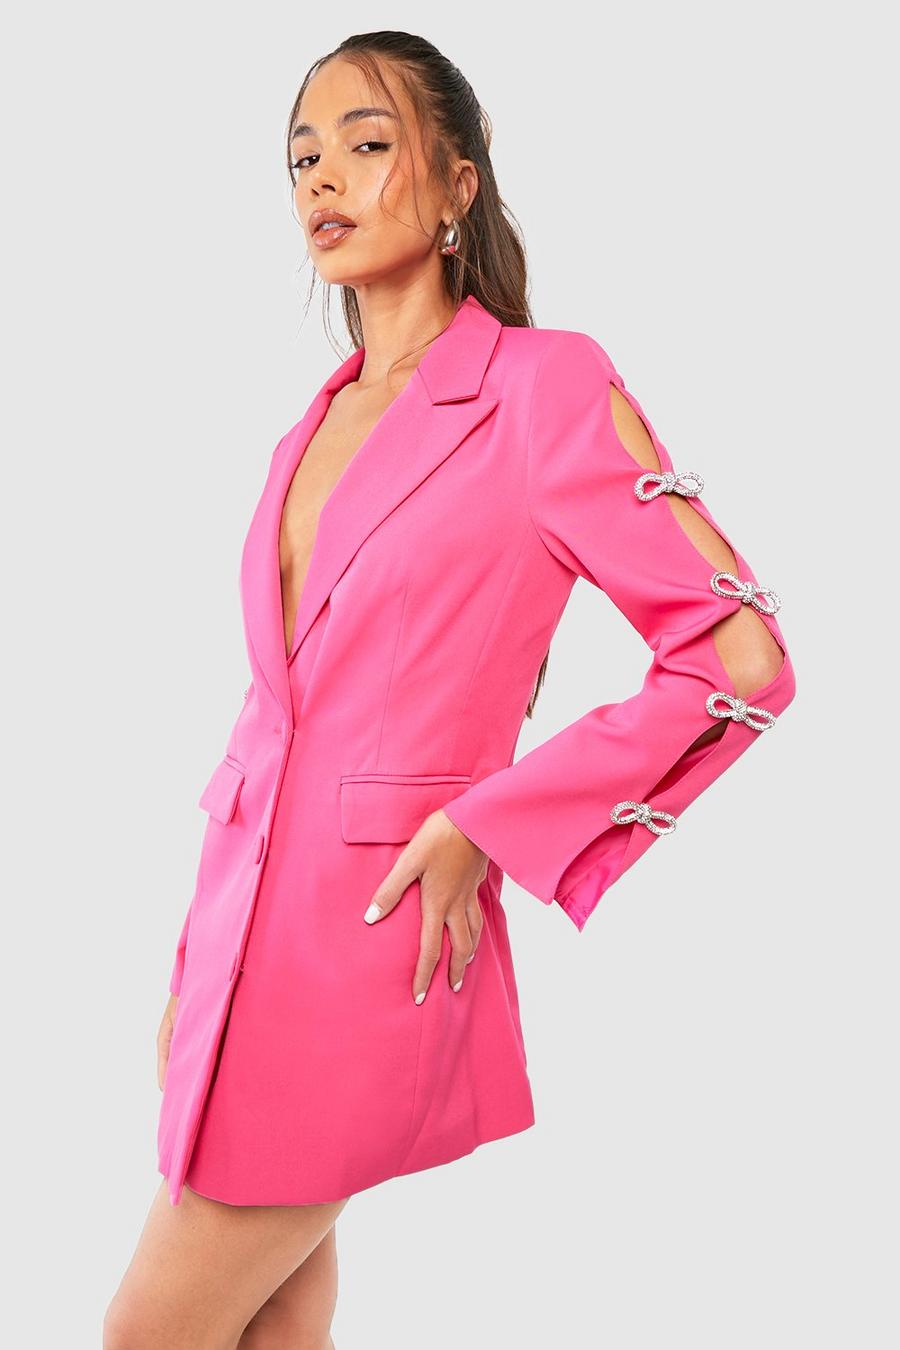 Pink Getailleerde Premium Blazer Jurk Met Steentjes En Strik Detail